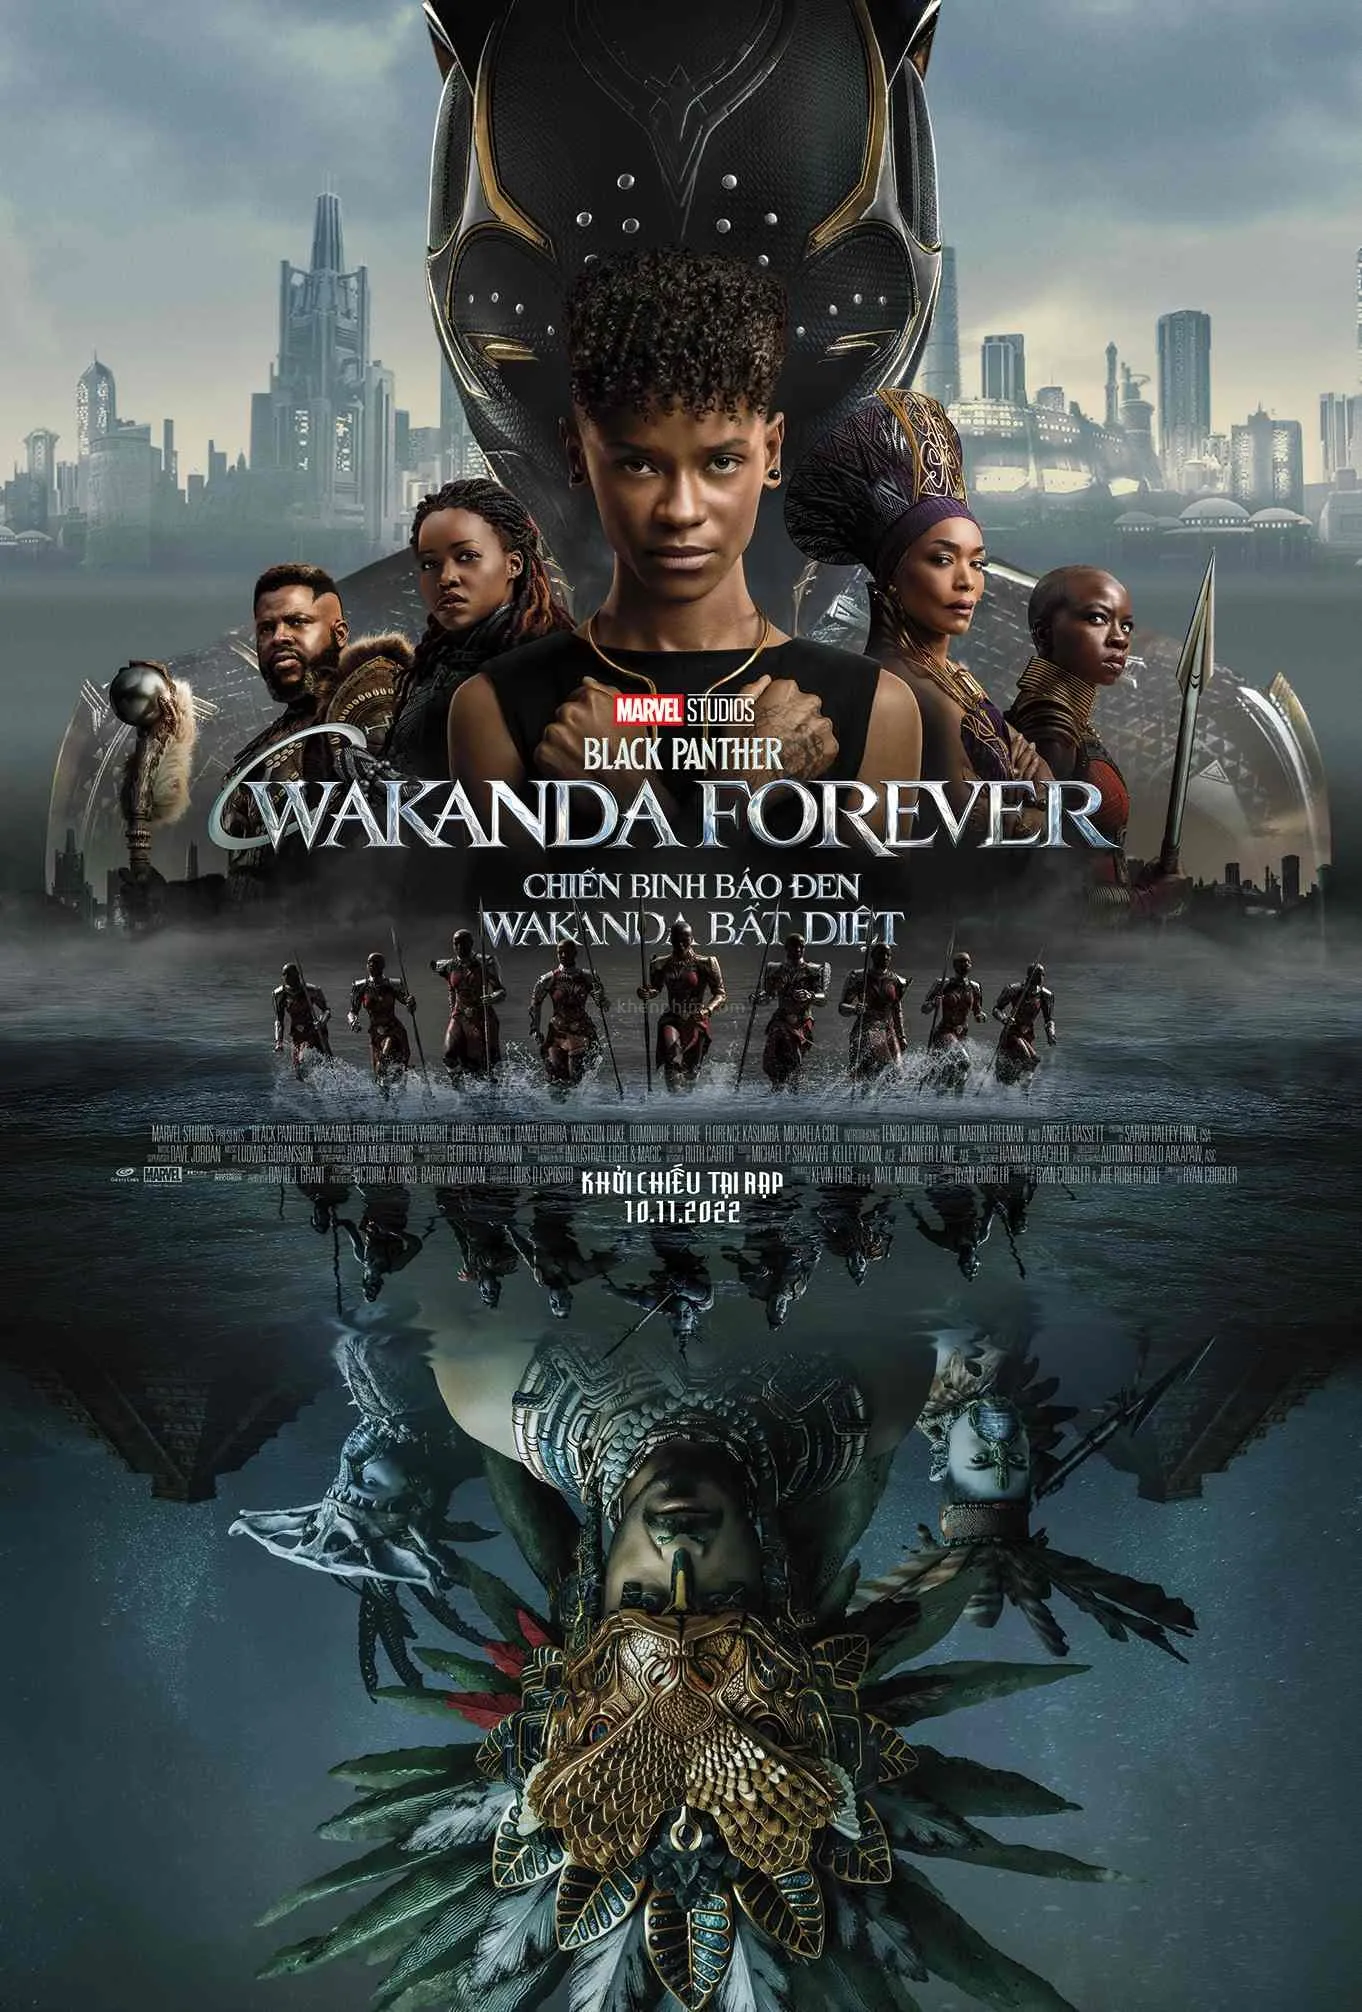 Poster phim Black Panther 2: Wakanda Forever (Chiến Binh Báo Đen 2: Wakanda Bất Diệt)